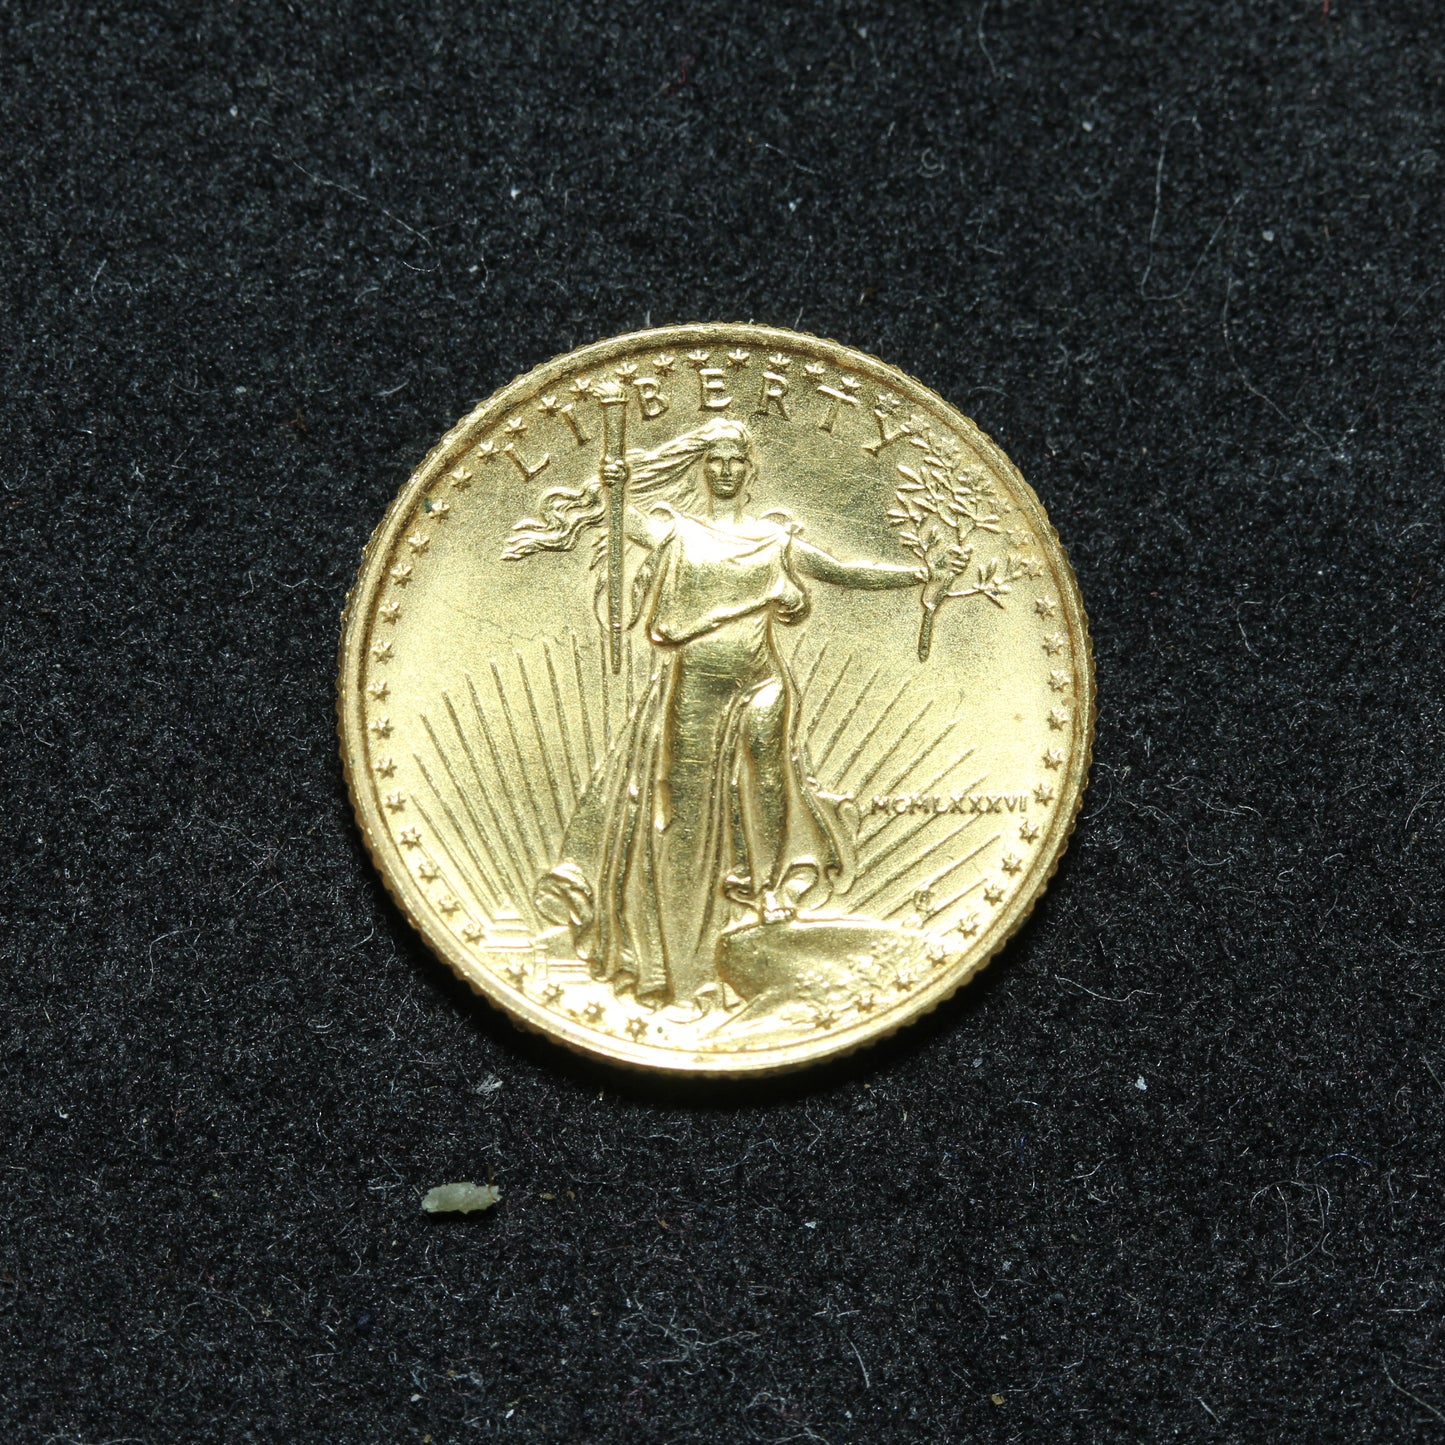 1986 1/10 Oz Gold $5 American Gold Eagle - Edge Damage